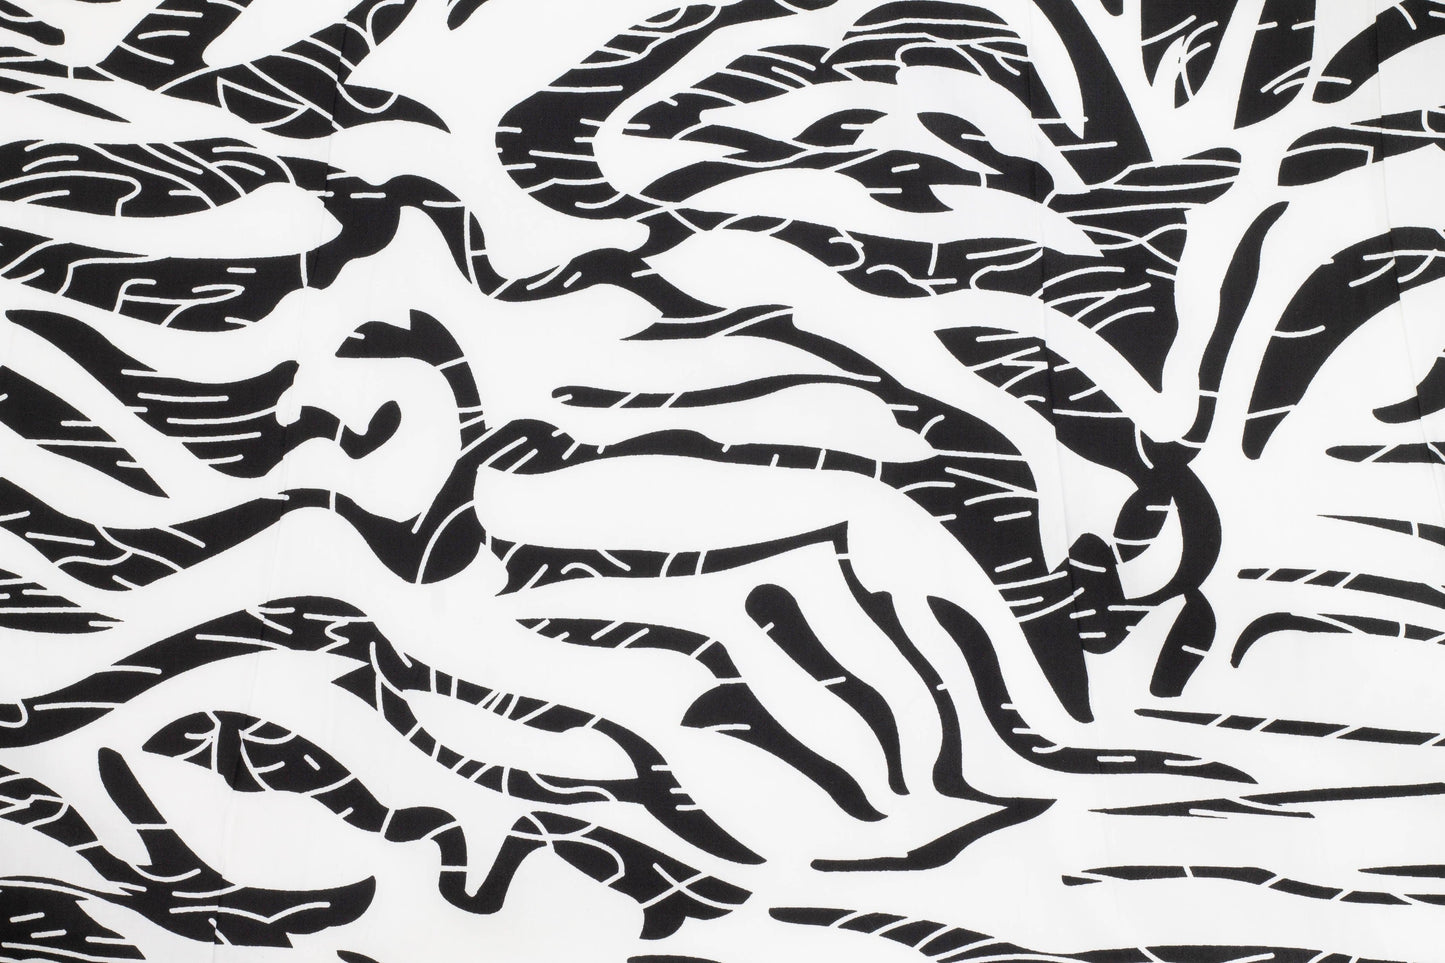 Black and White Zebra Print Cotton - Prime Fabrics